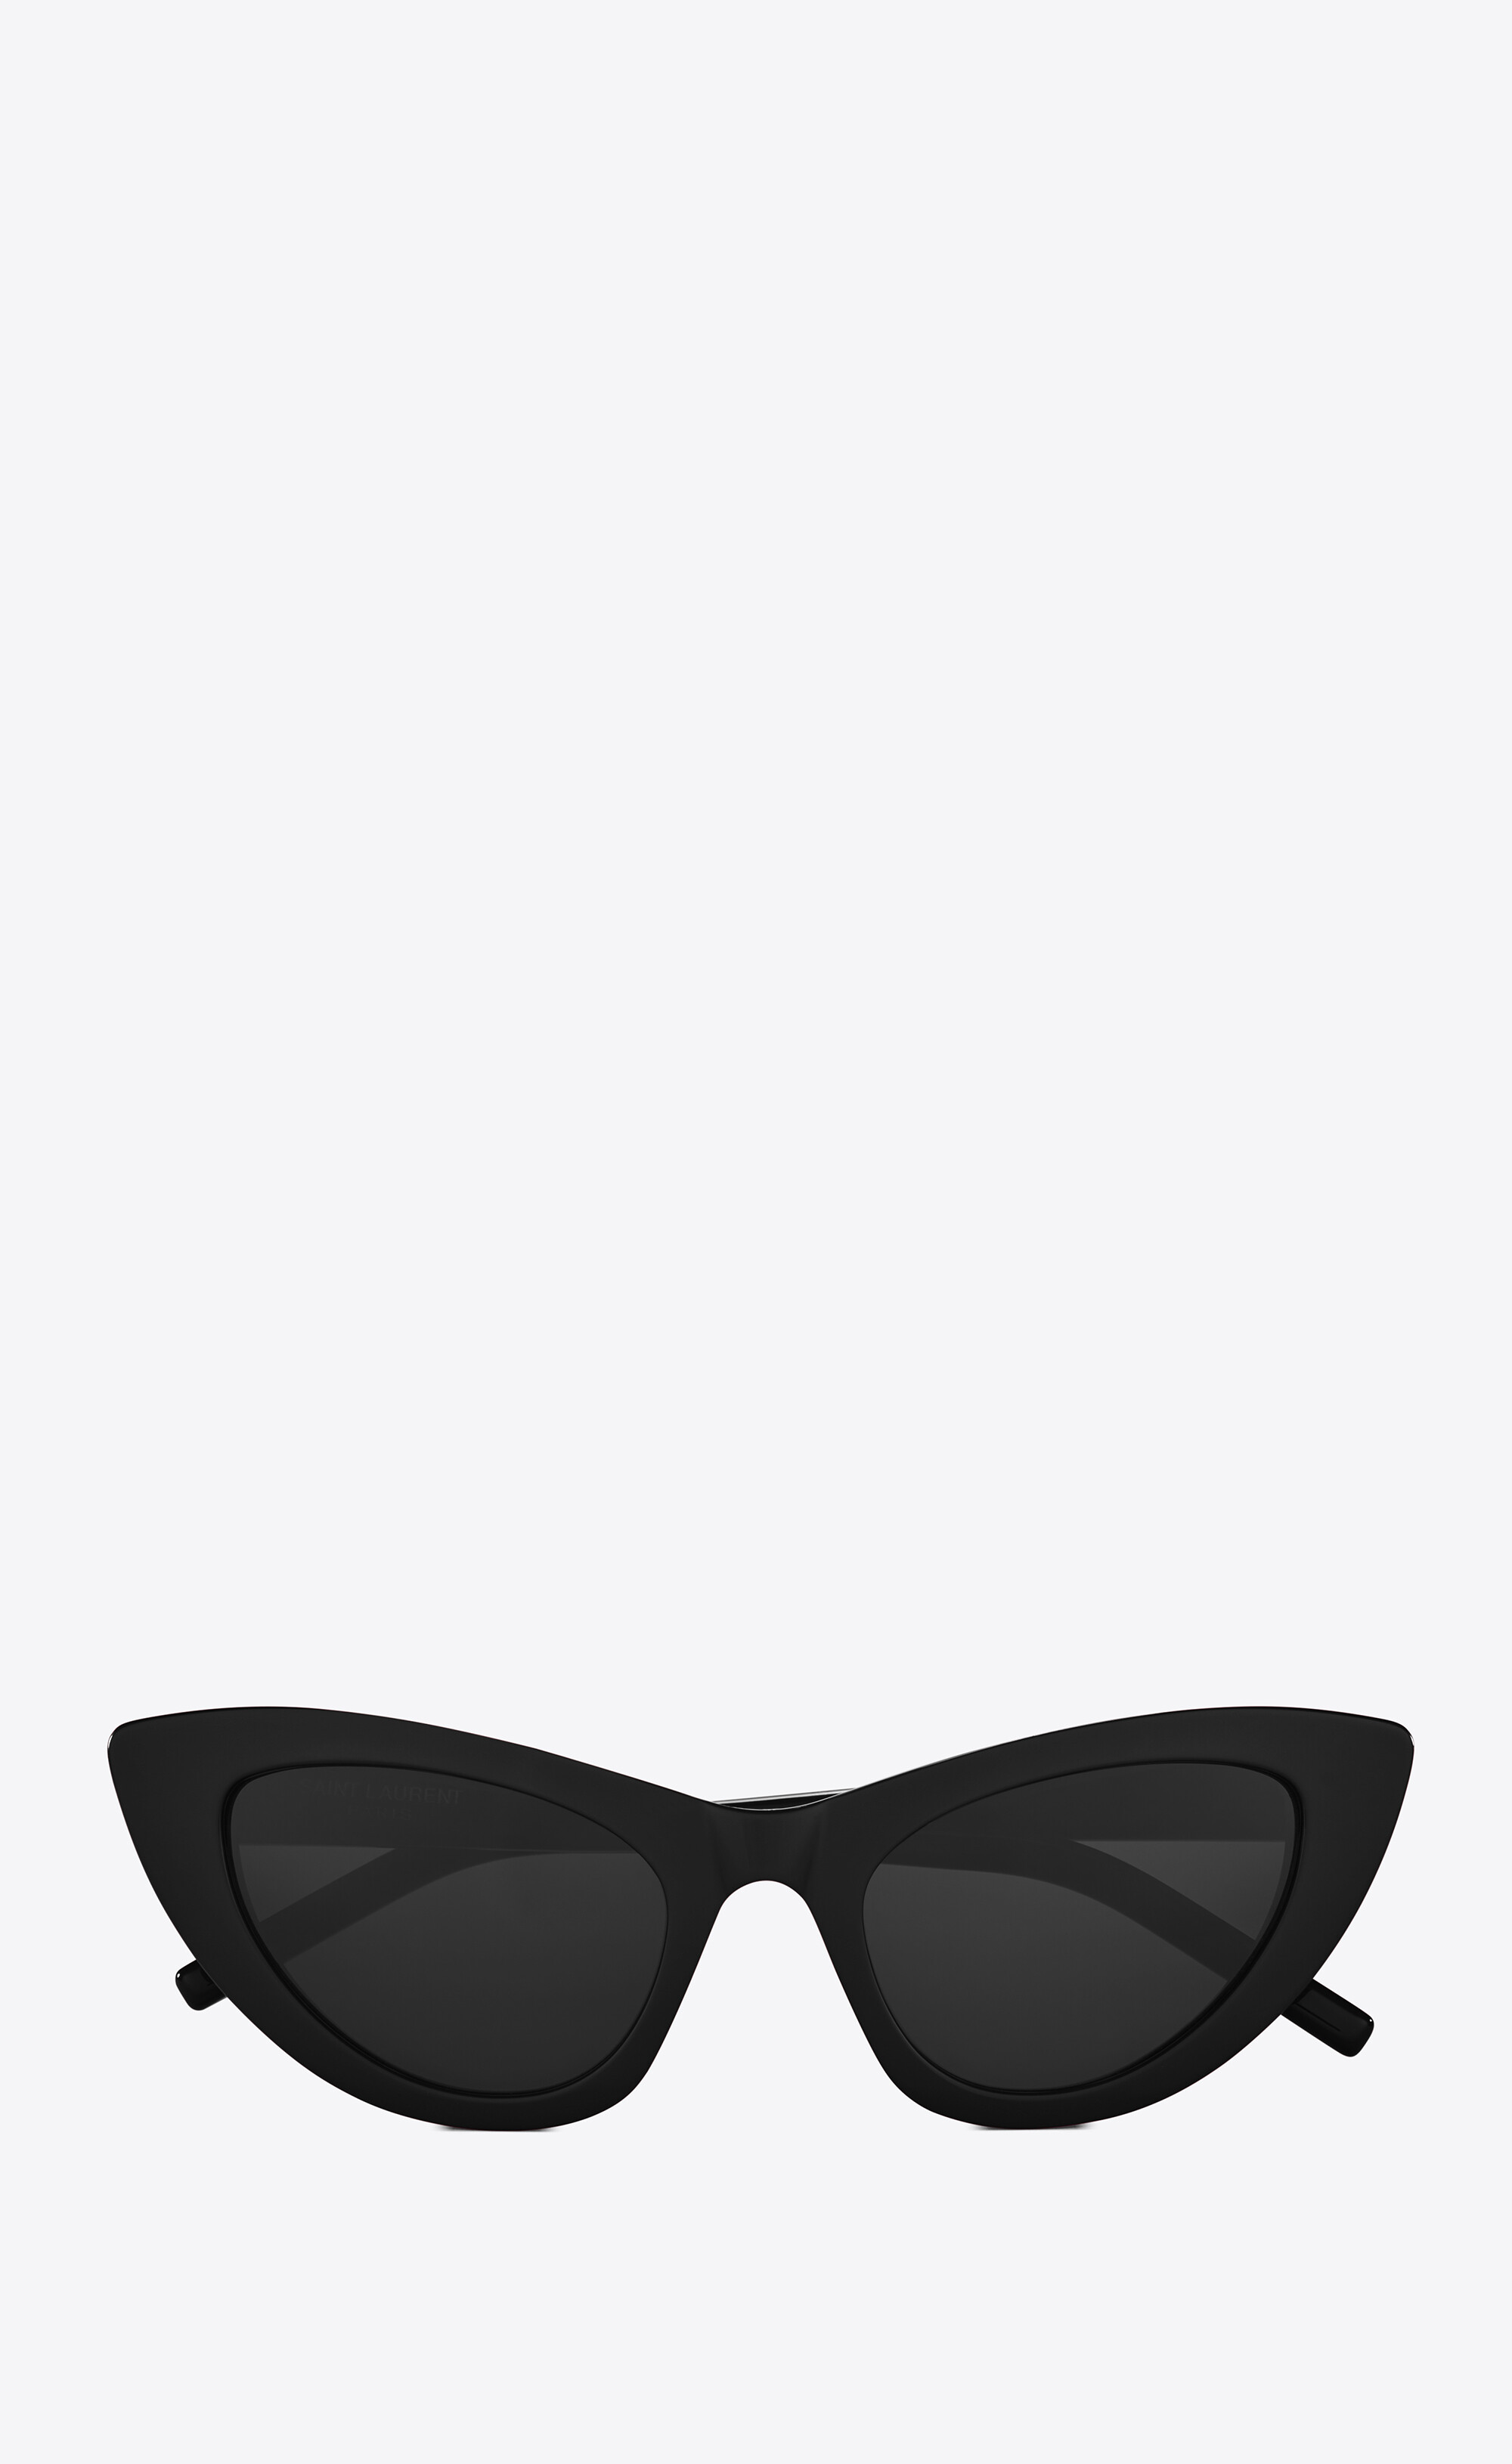 Yves Saint Laurent - New Wave SL 215 Grace Sunglasses with Triangular Frame  - Natural - Saint Laurent Eyewear - Avvenice